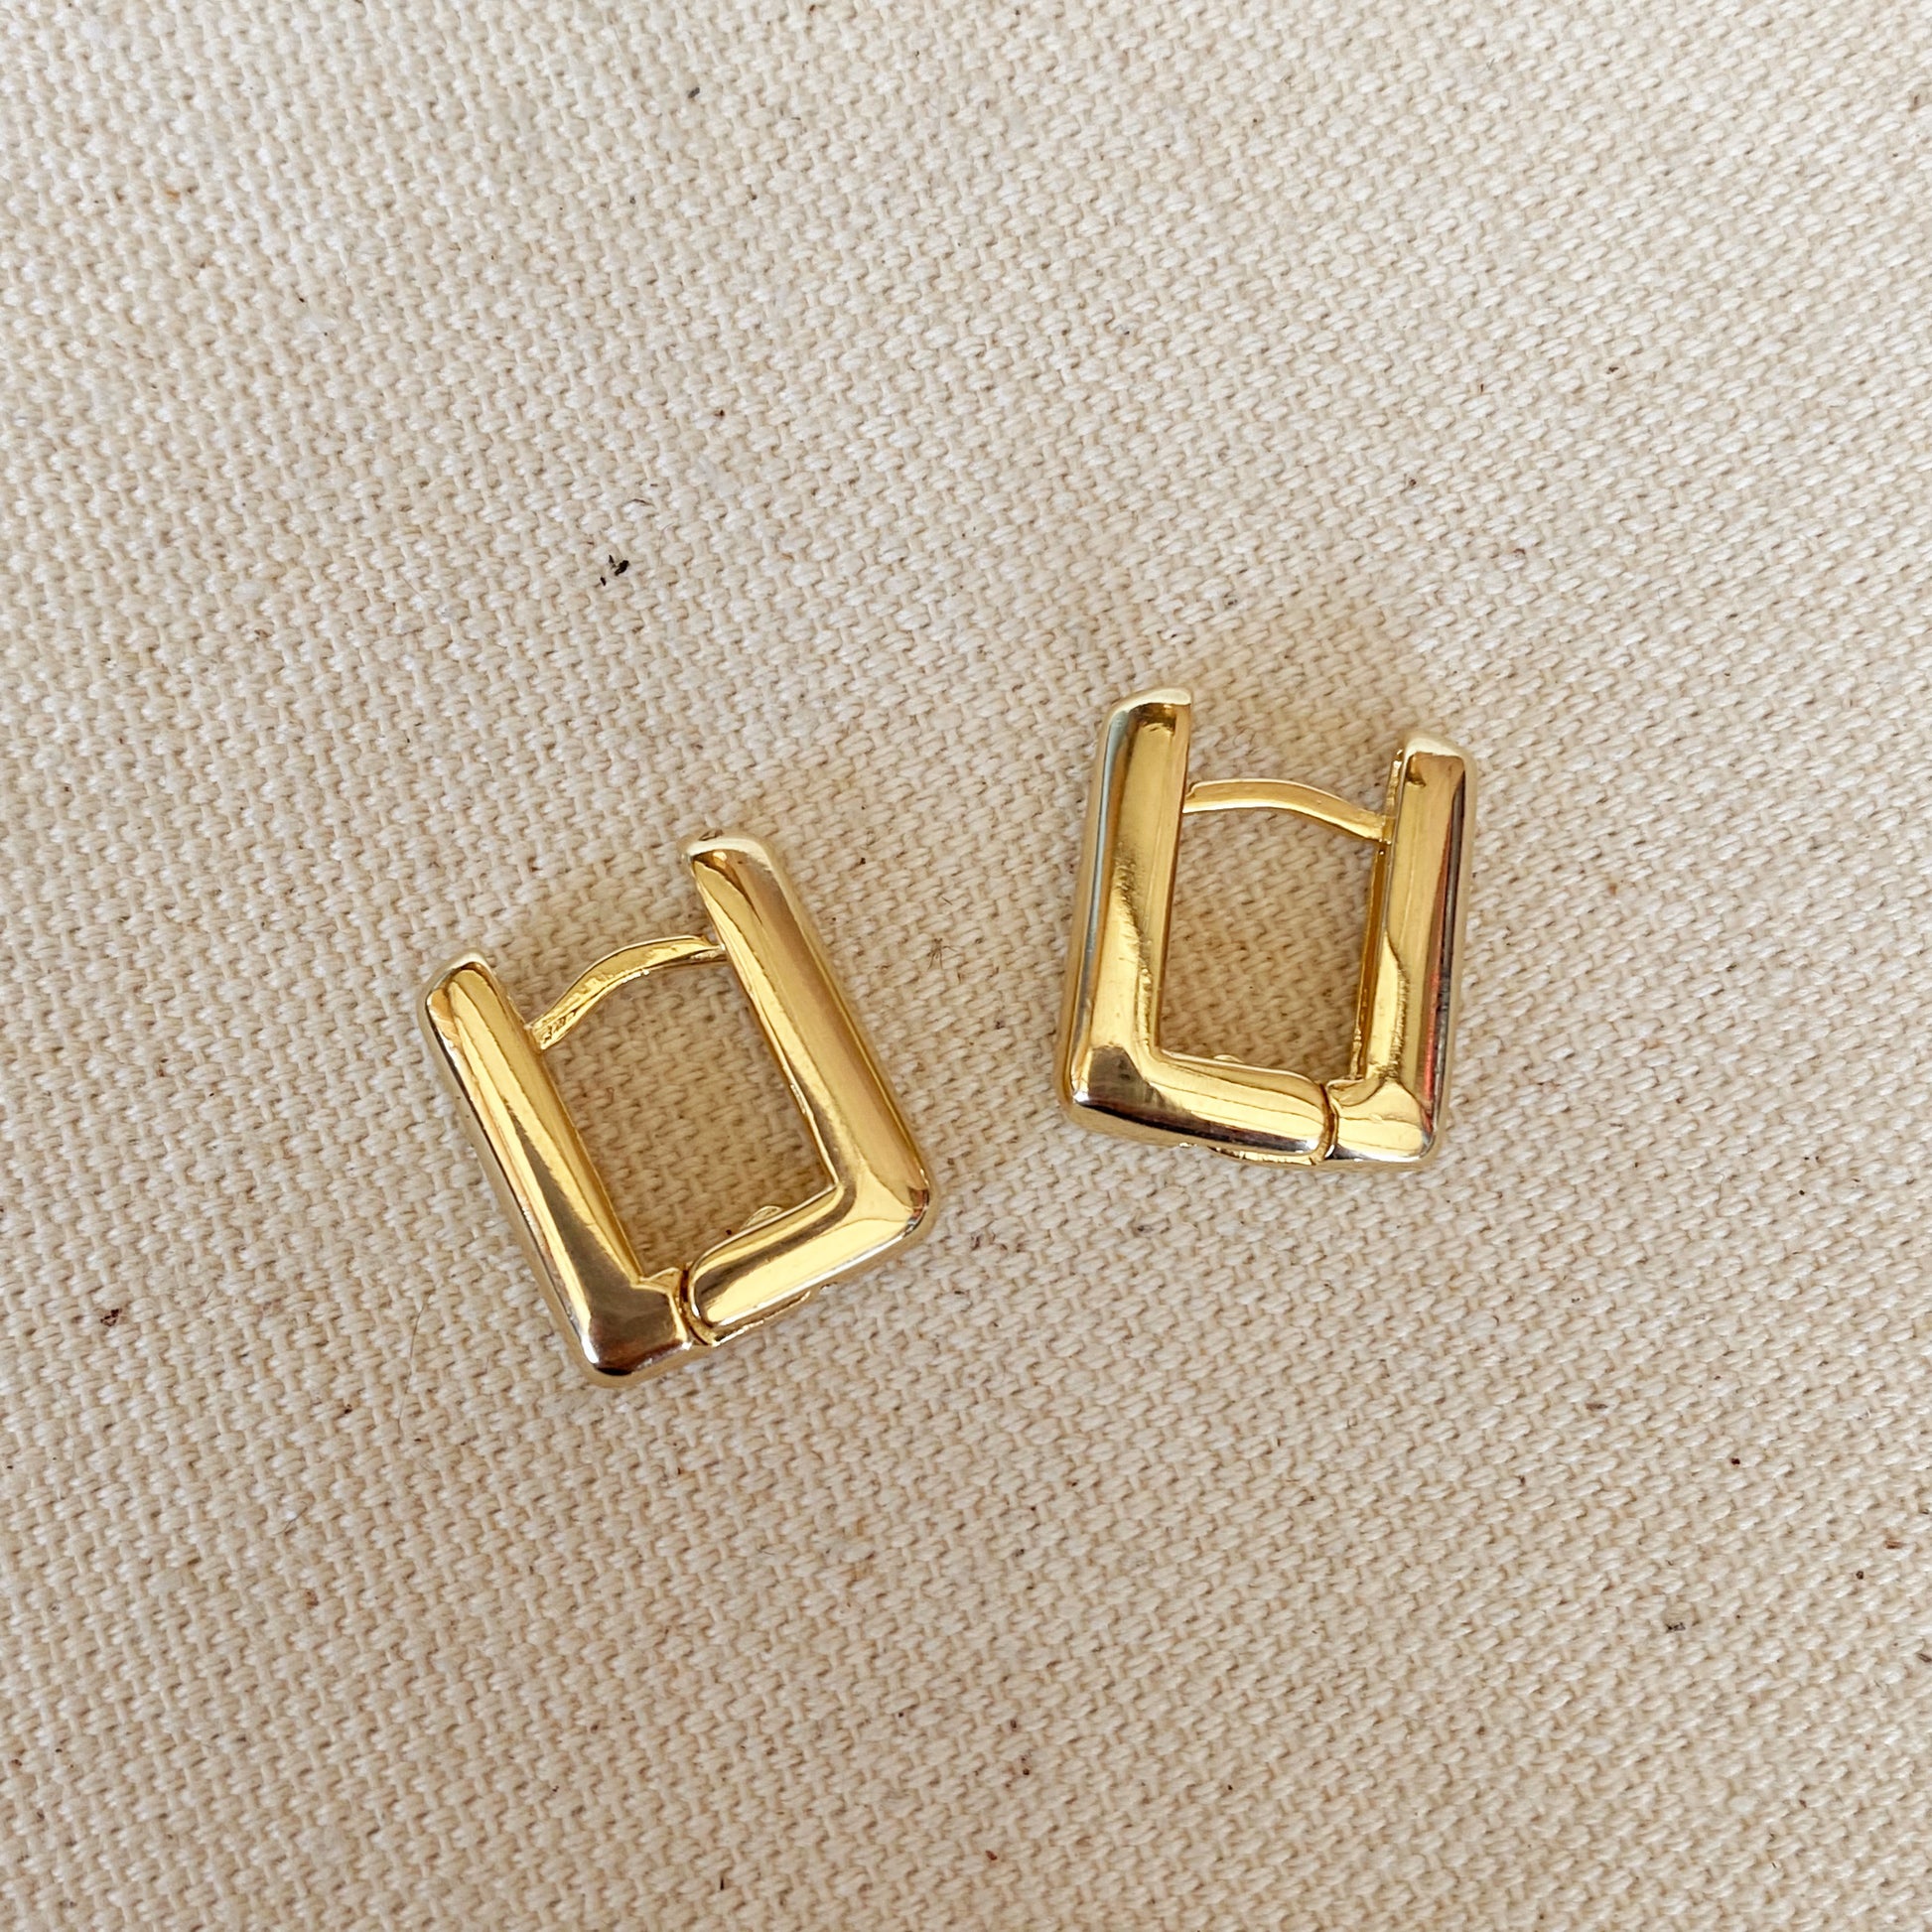 GoldFi 18k Gold Filled Rectangle Shaped Hoop Earrings